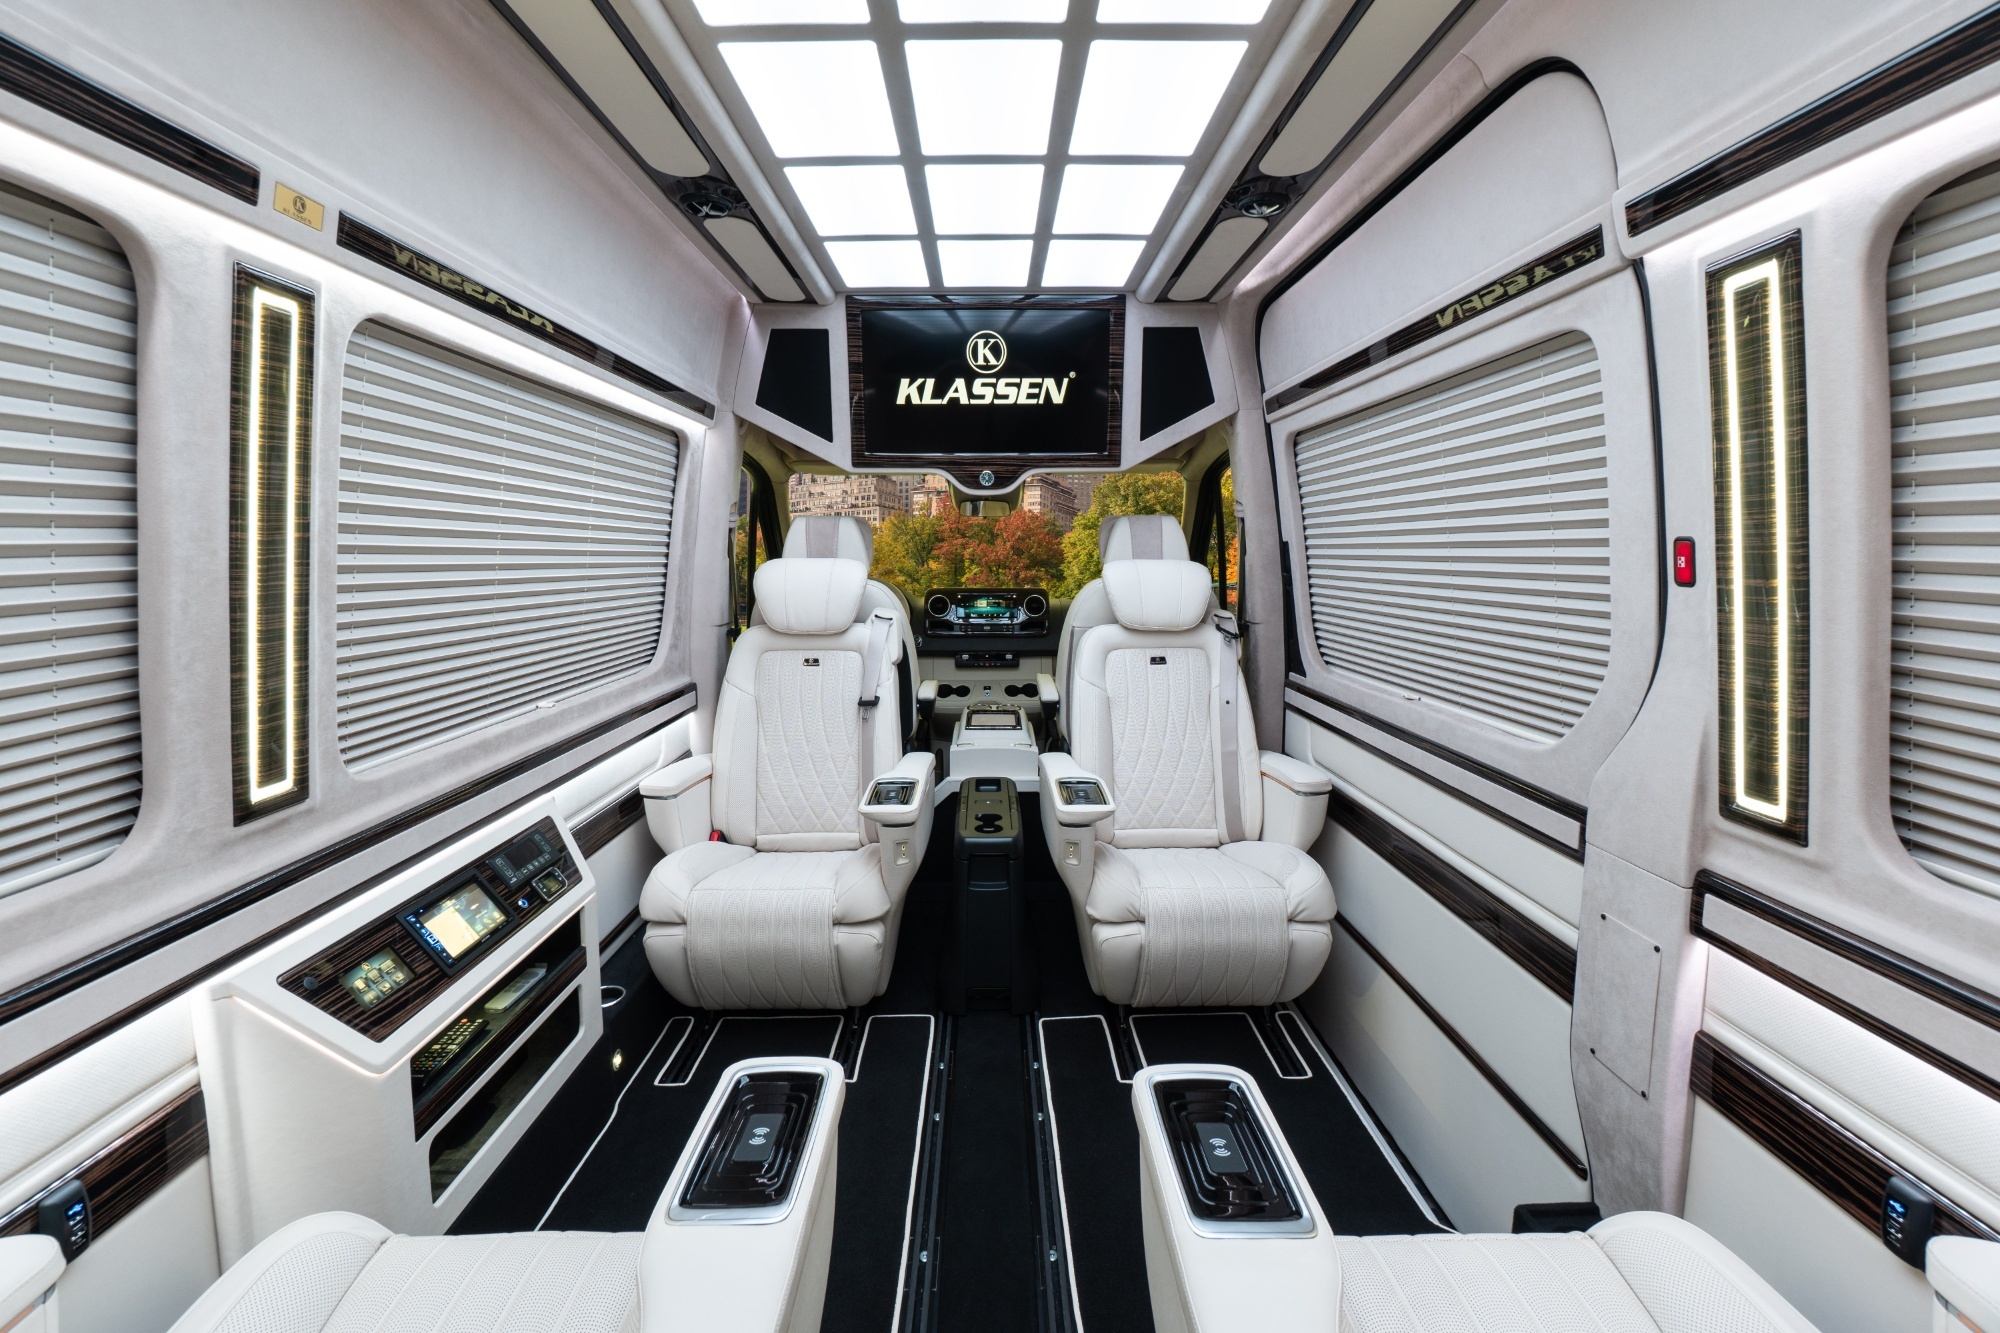 Mercedes Sprinter Amg Van New Full Review Klassen Interior Exterior